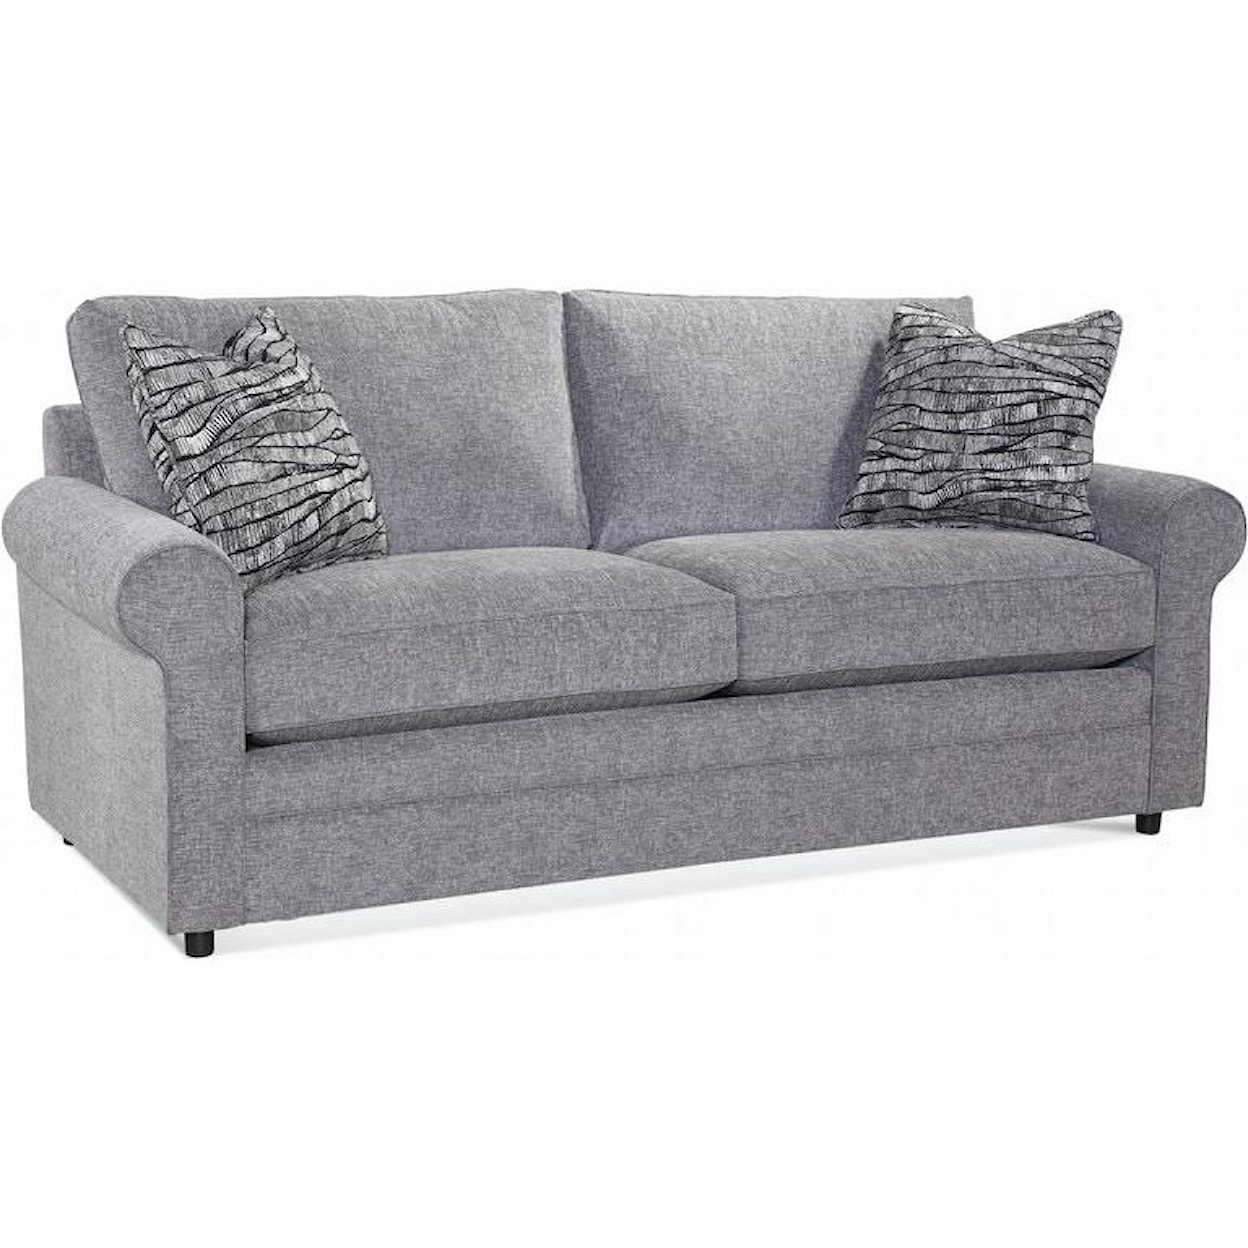 Braxton Culler Edgeworth Upholstered Sleeper Sofa